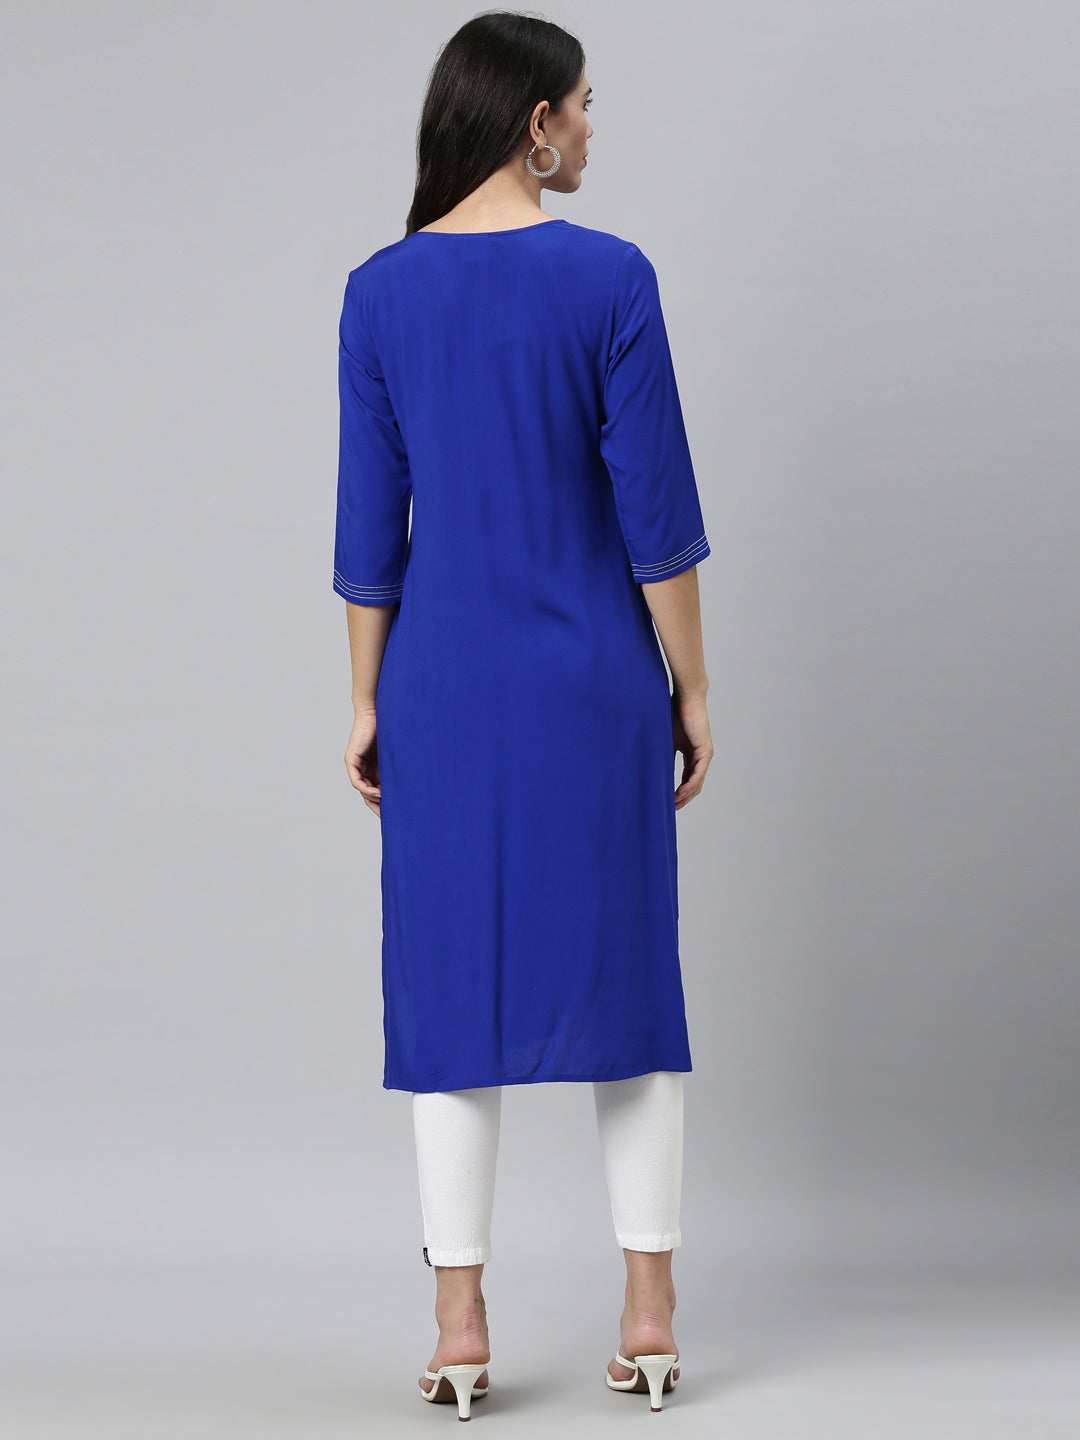 Neeru's Royal Blue Color Rayon Fabric Kurta